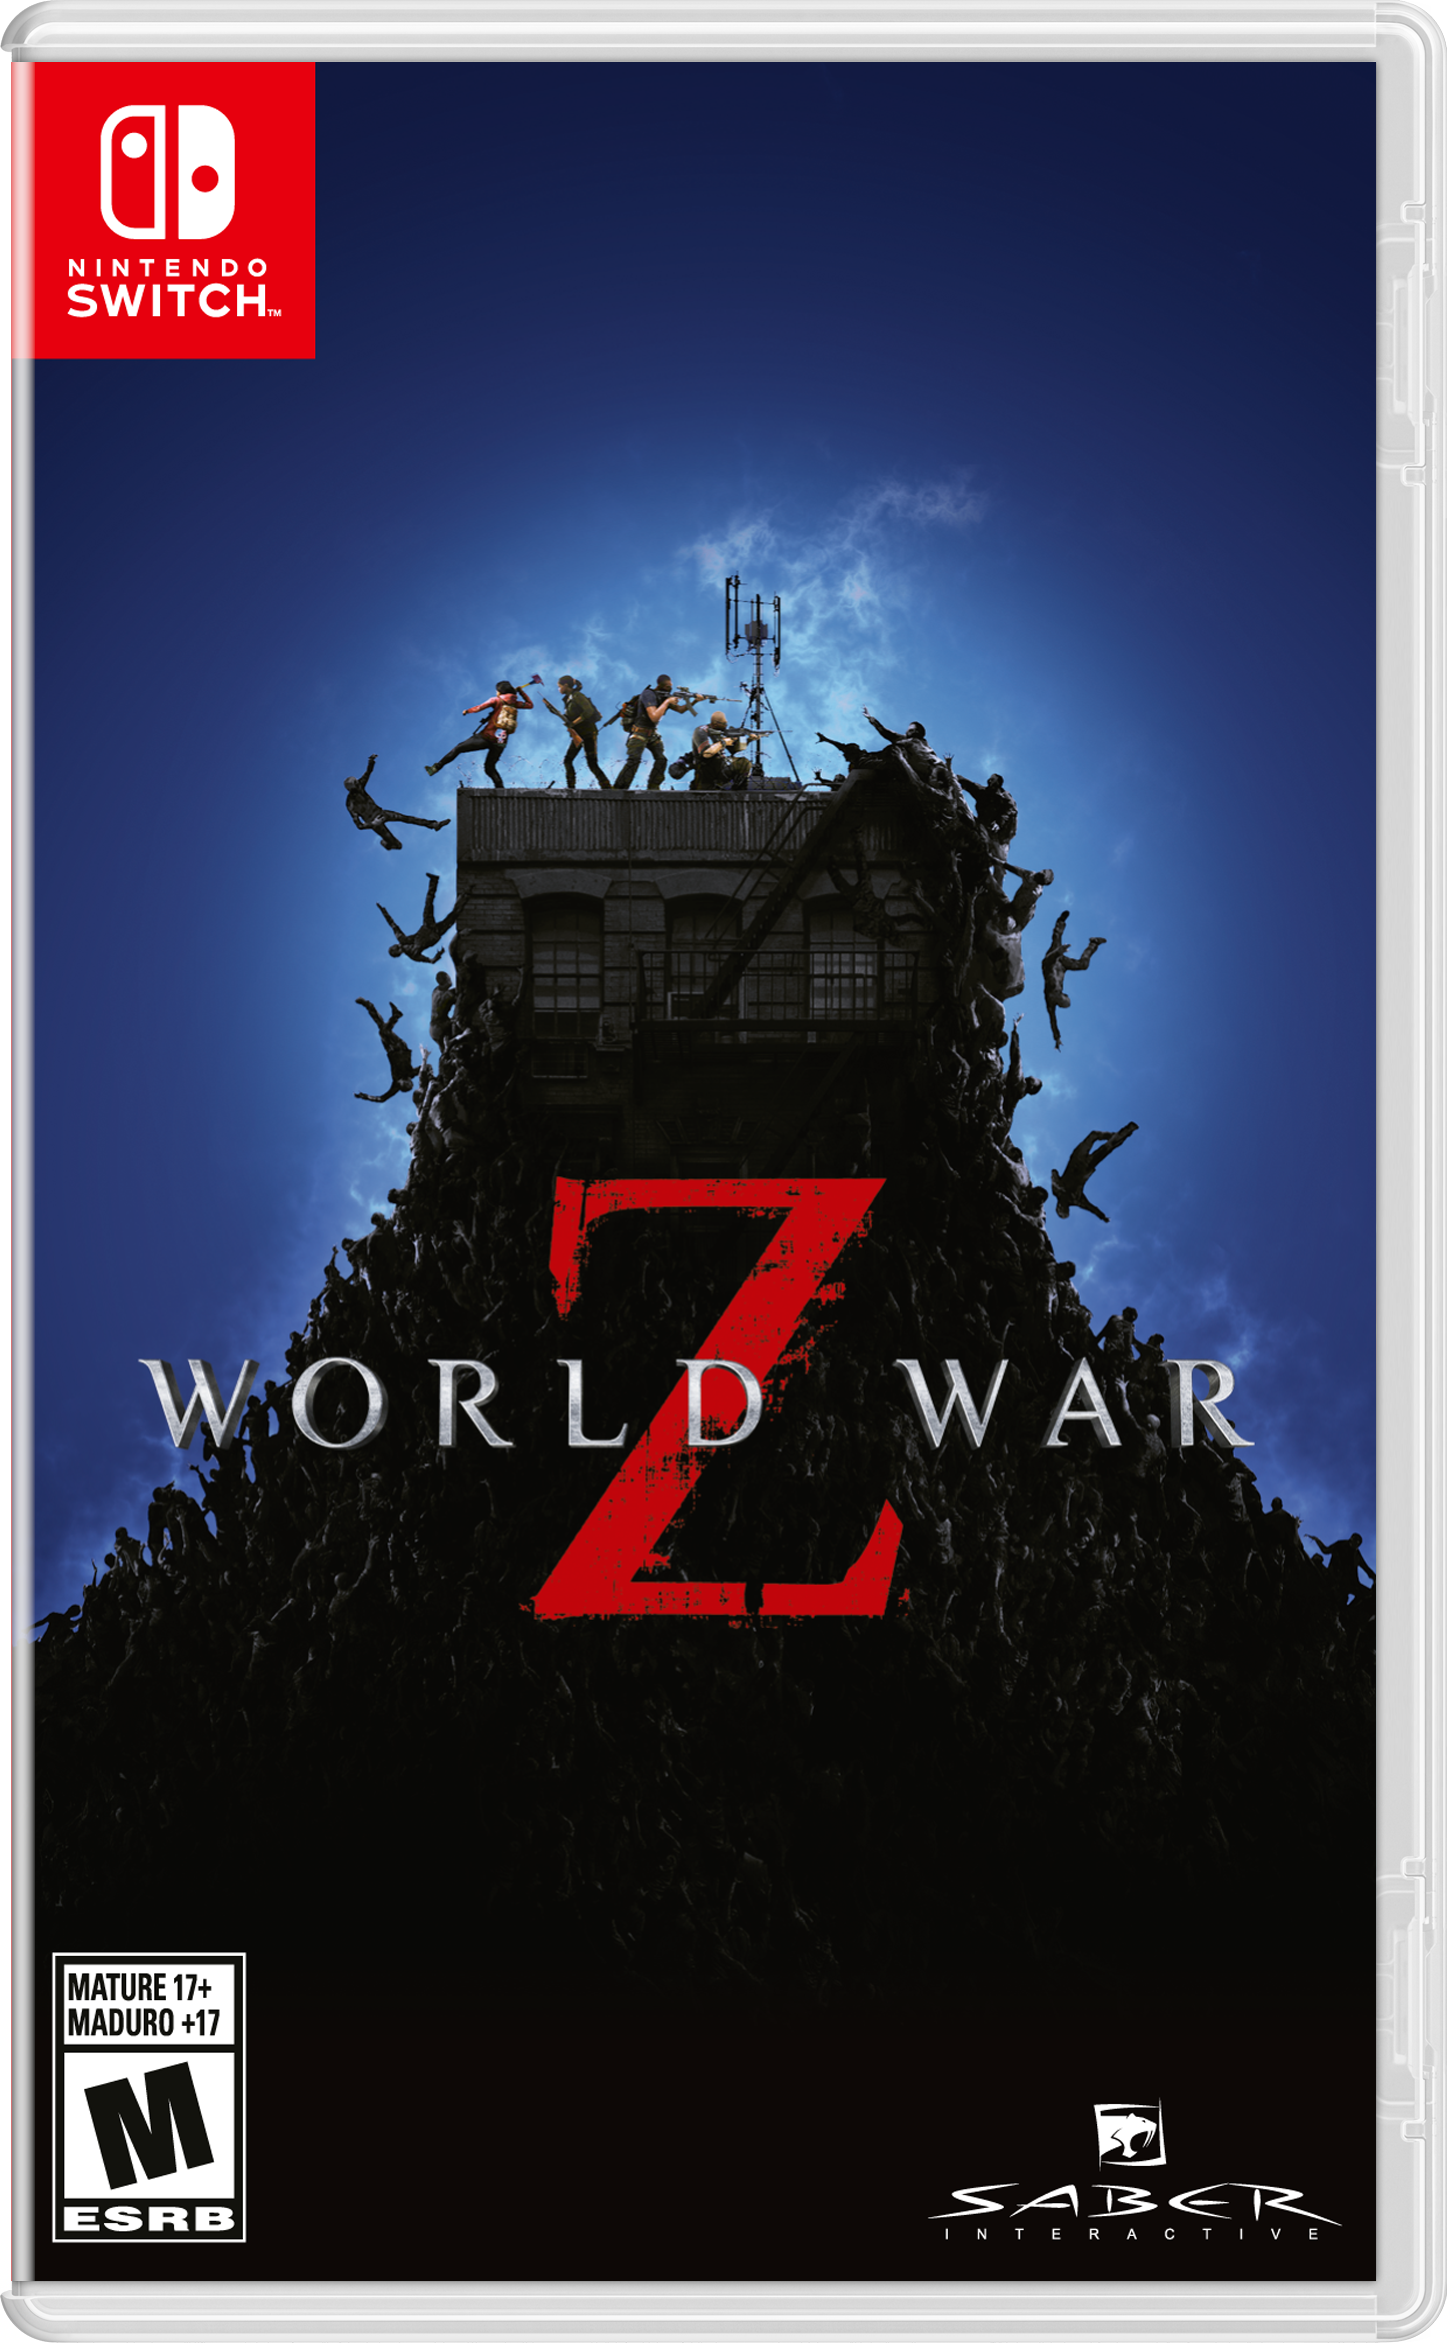  World War Z Aftermath (PS4) : Video Games